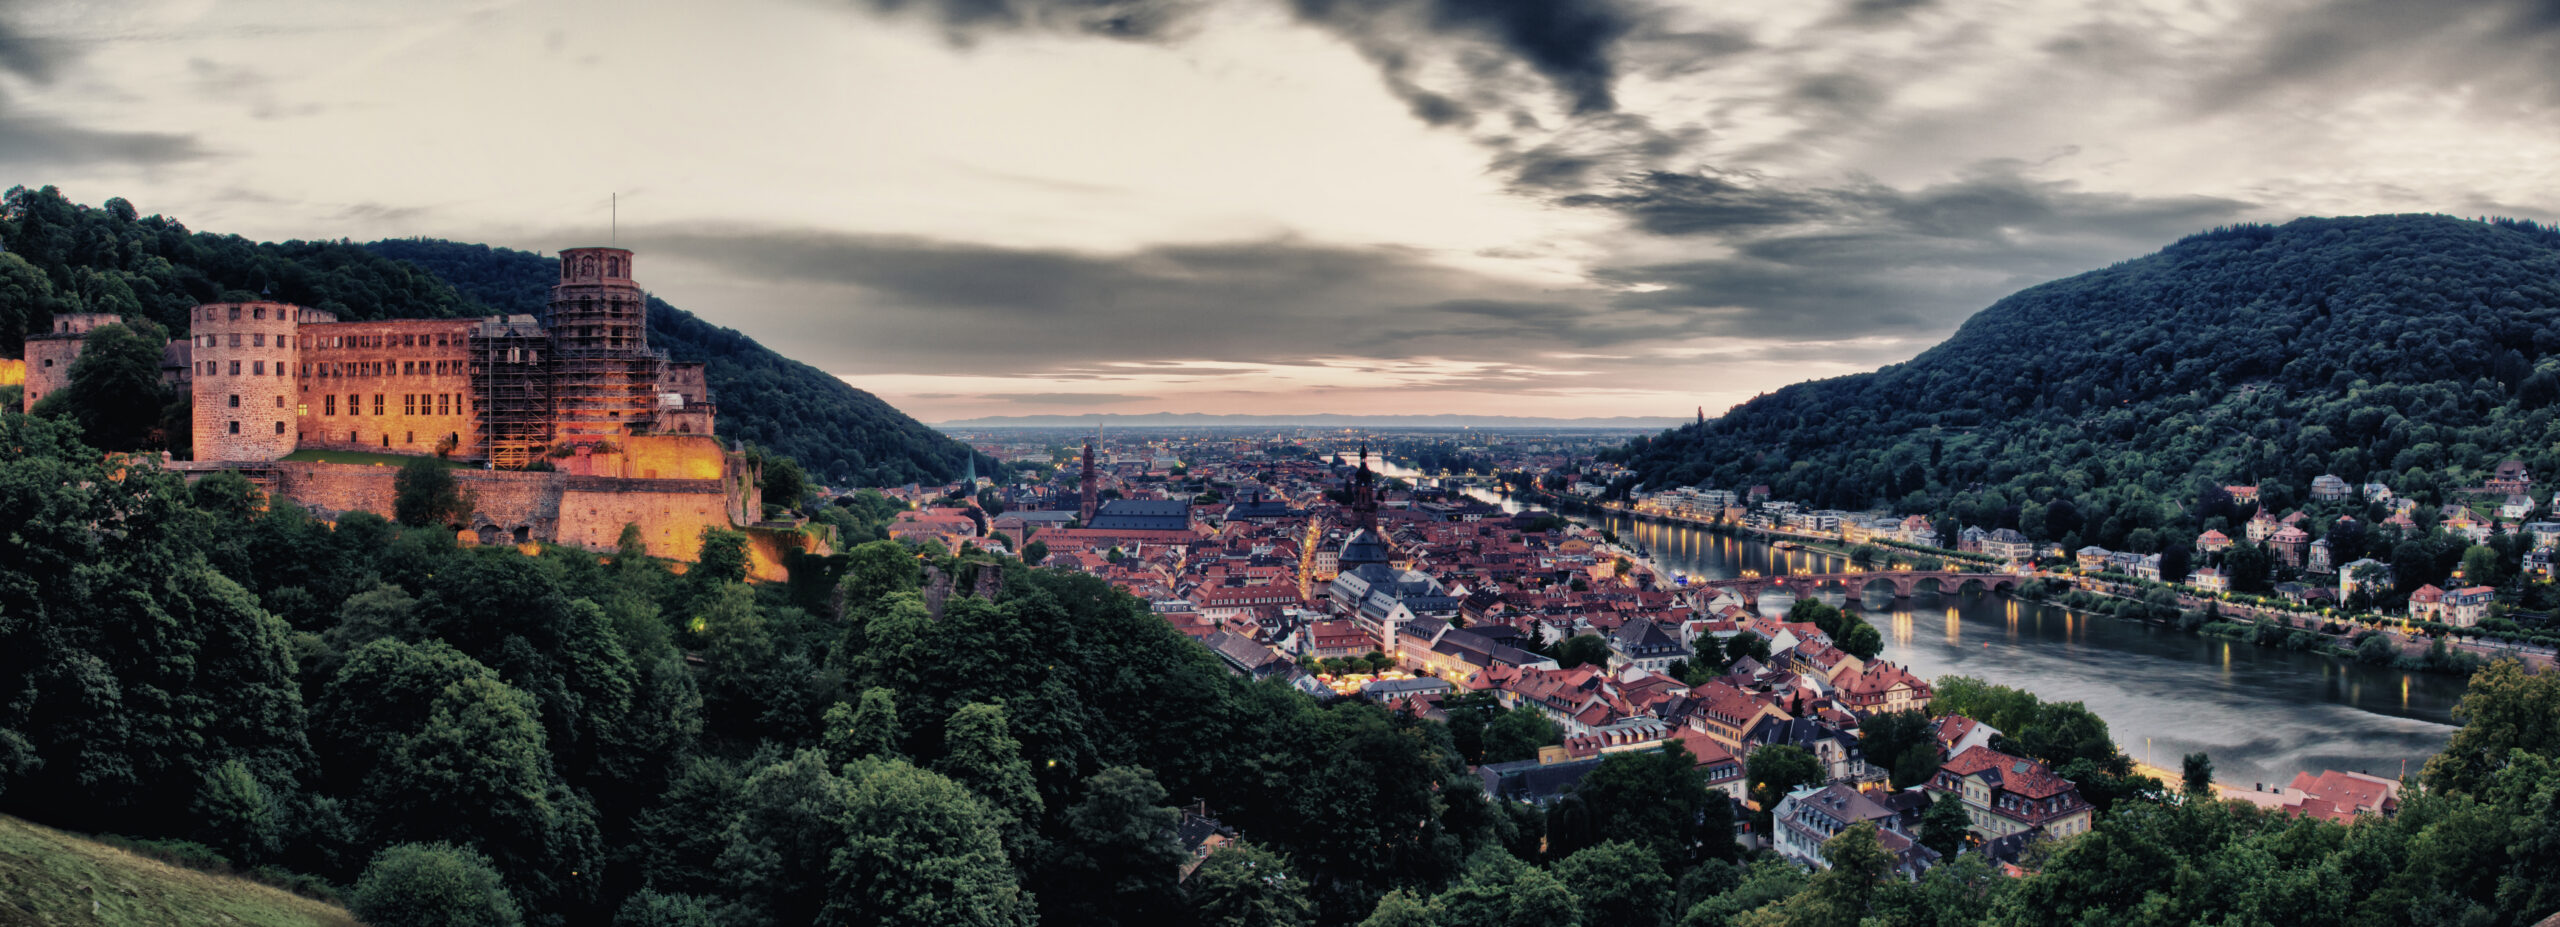 Panorama vom Schloss Heidelberg bei Sonnenuntergang.